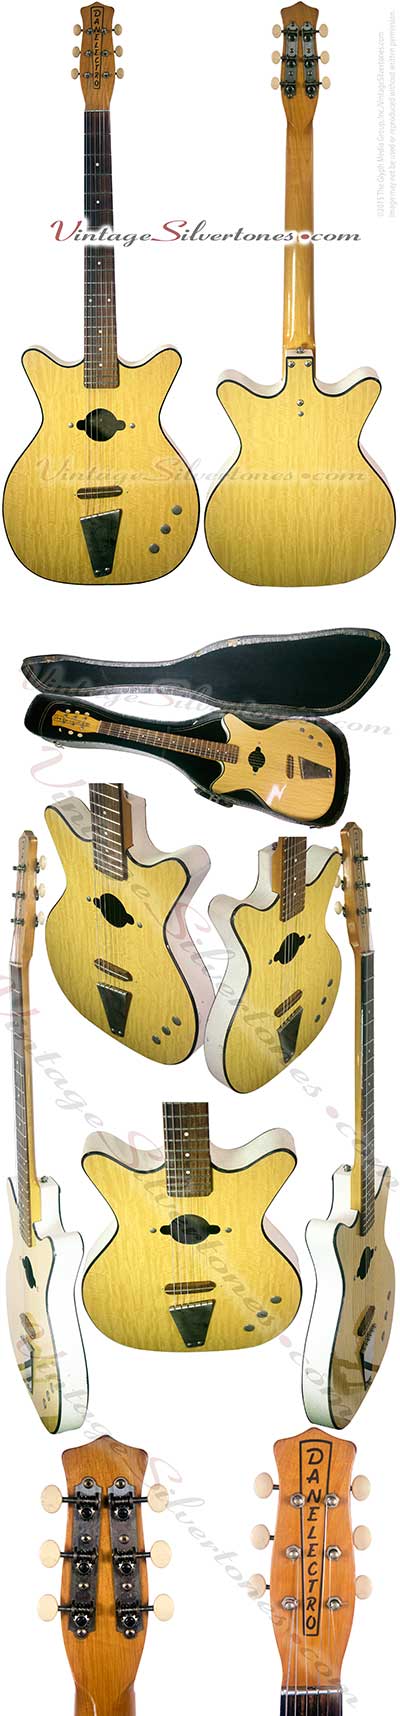 Danelectro Convertible acoustic guitar, symmetrical double cutaway, white woodgrain finish, 19